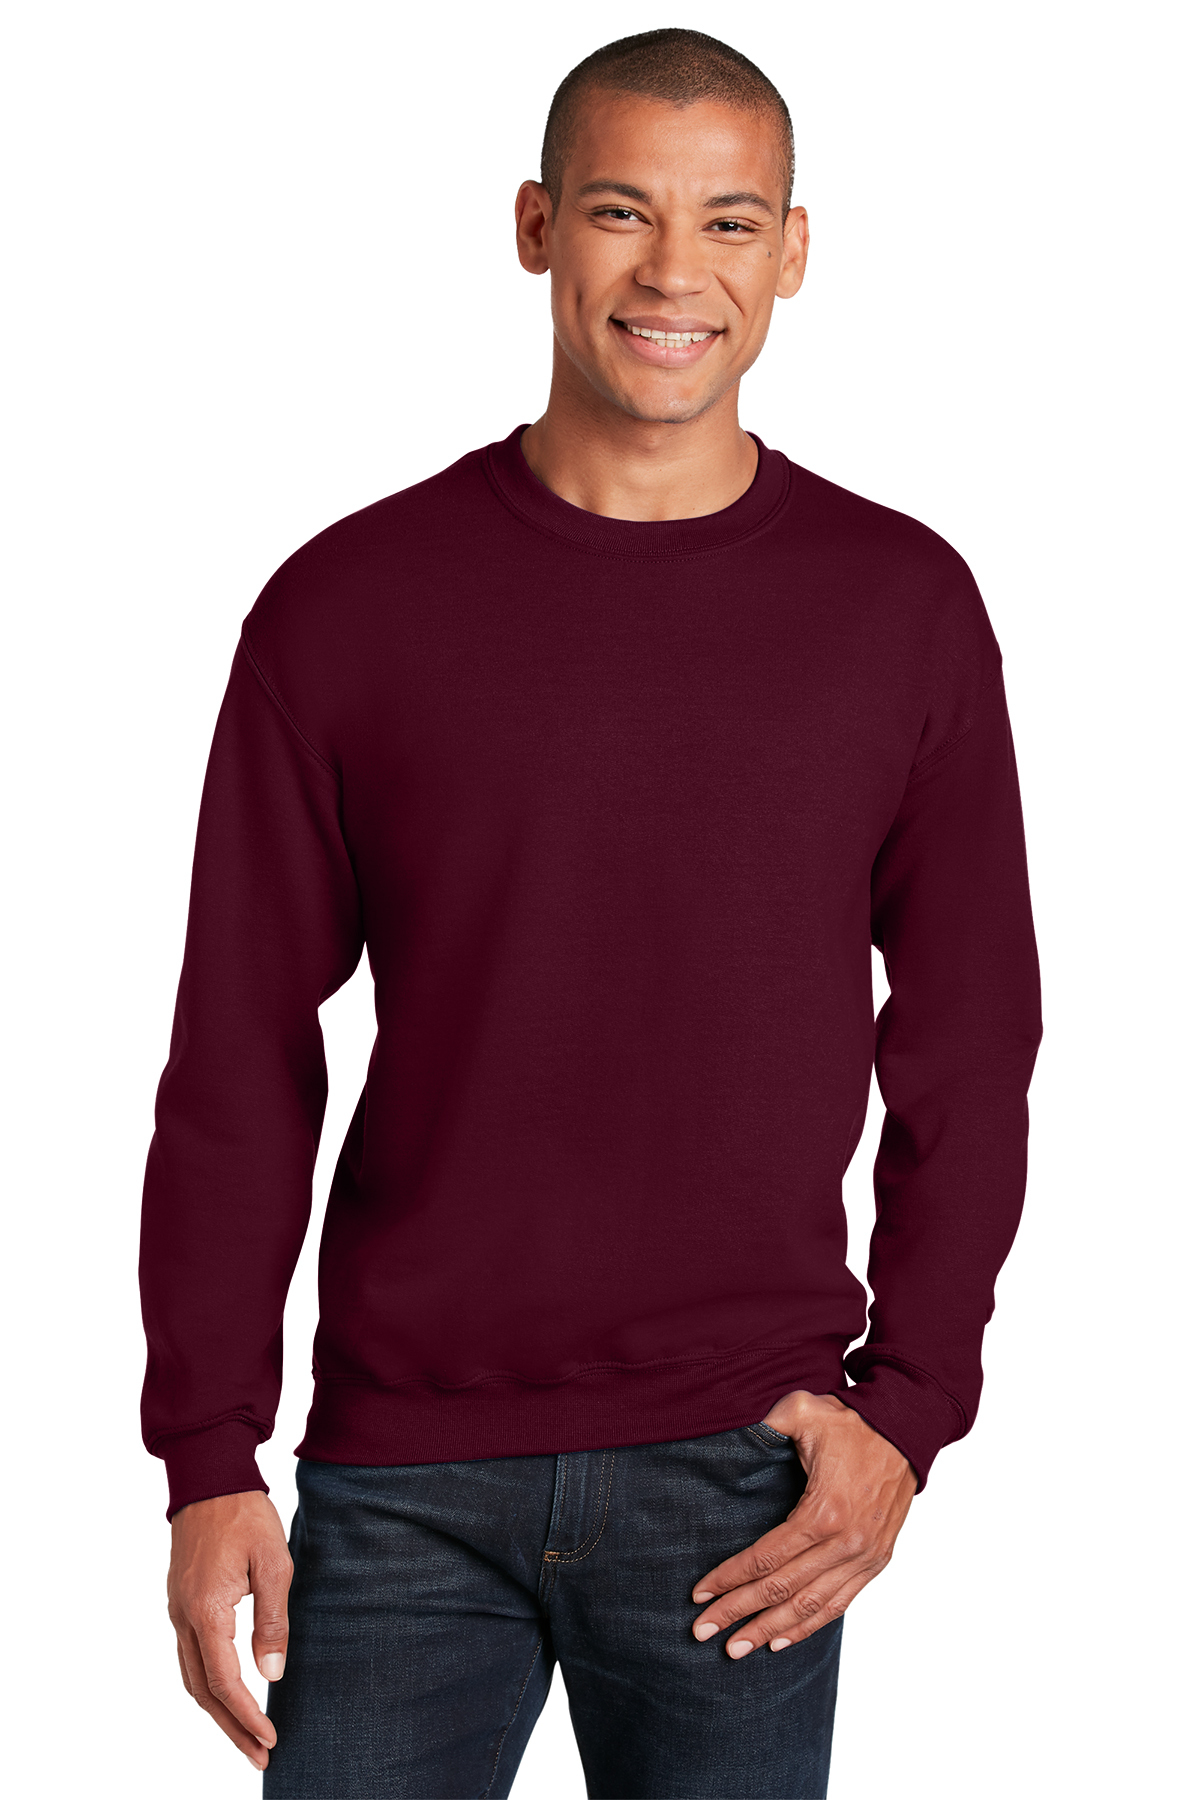 Gildan Activewear Crewneck Sweatshirt, L, BLACK